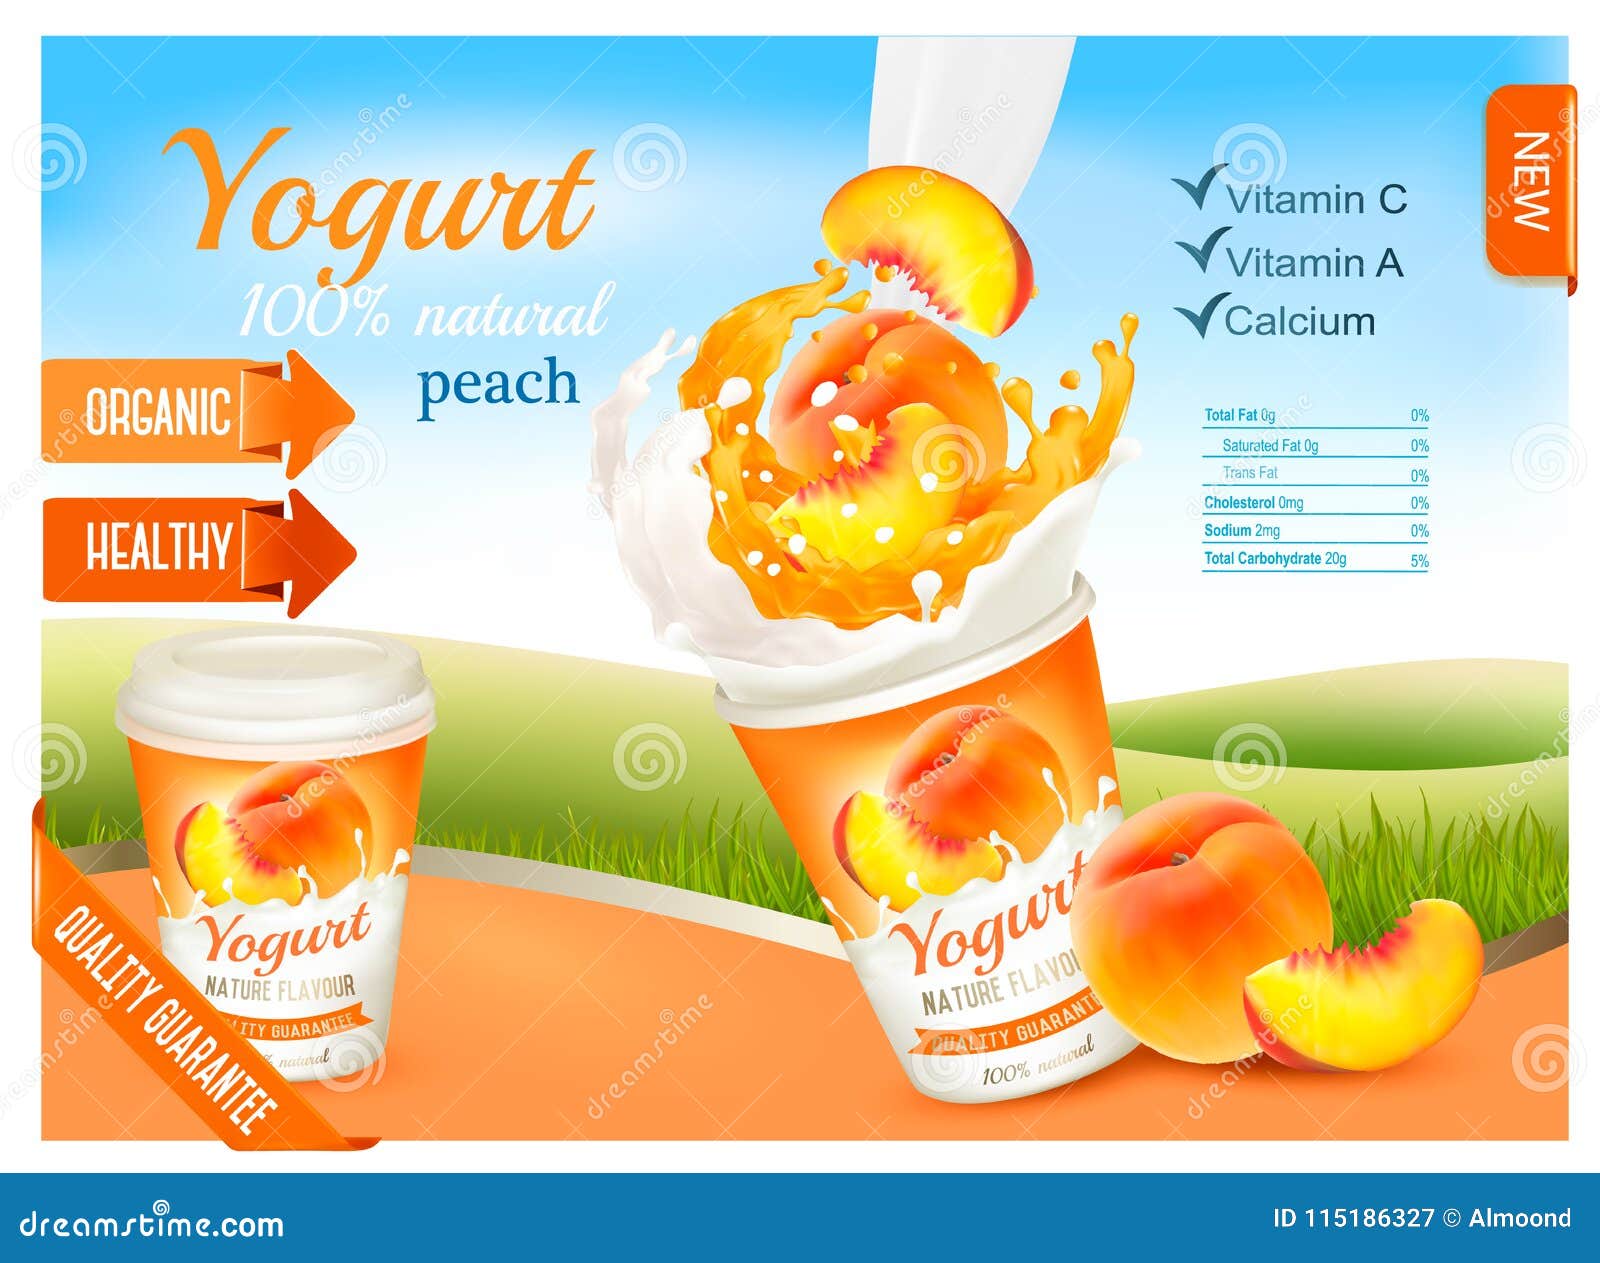 fruit yogurt with peach advert concept.